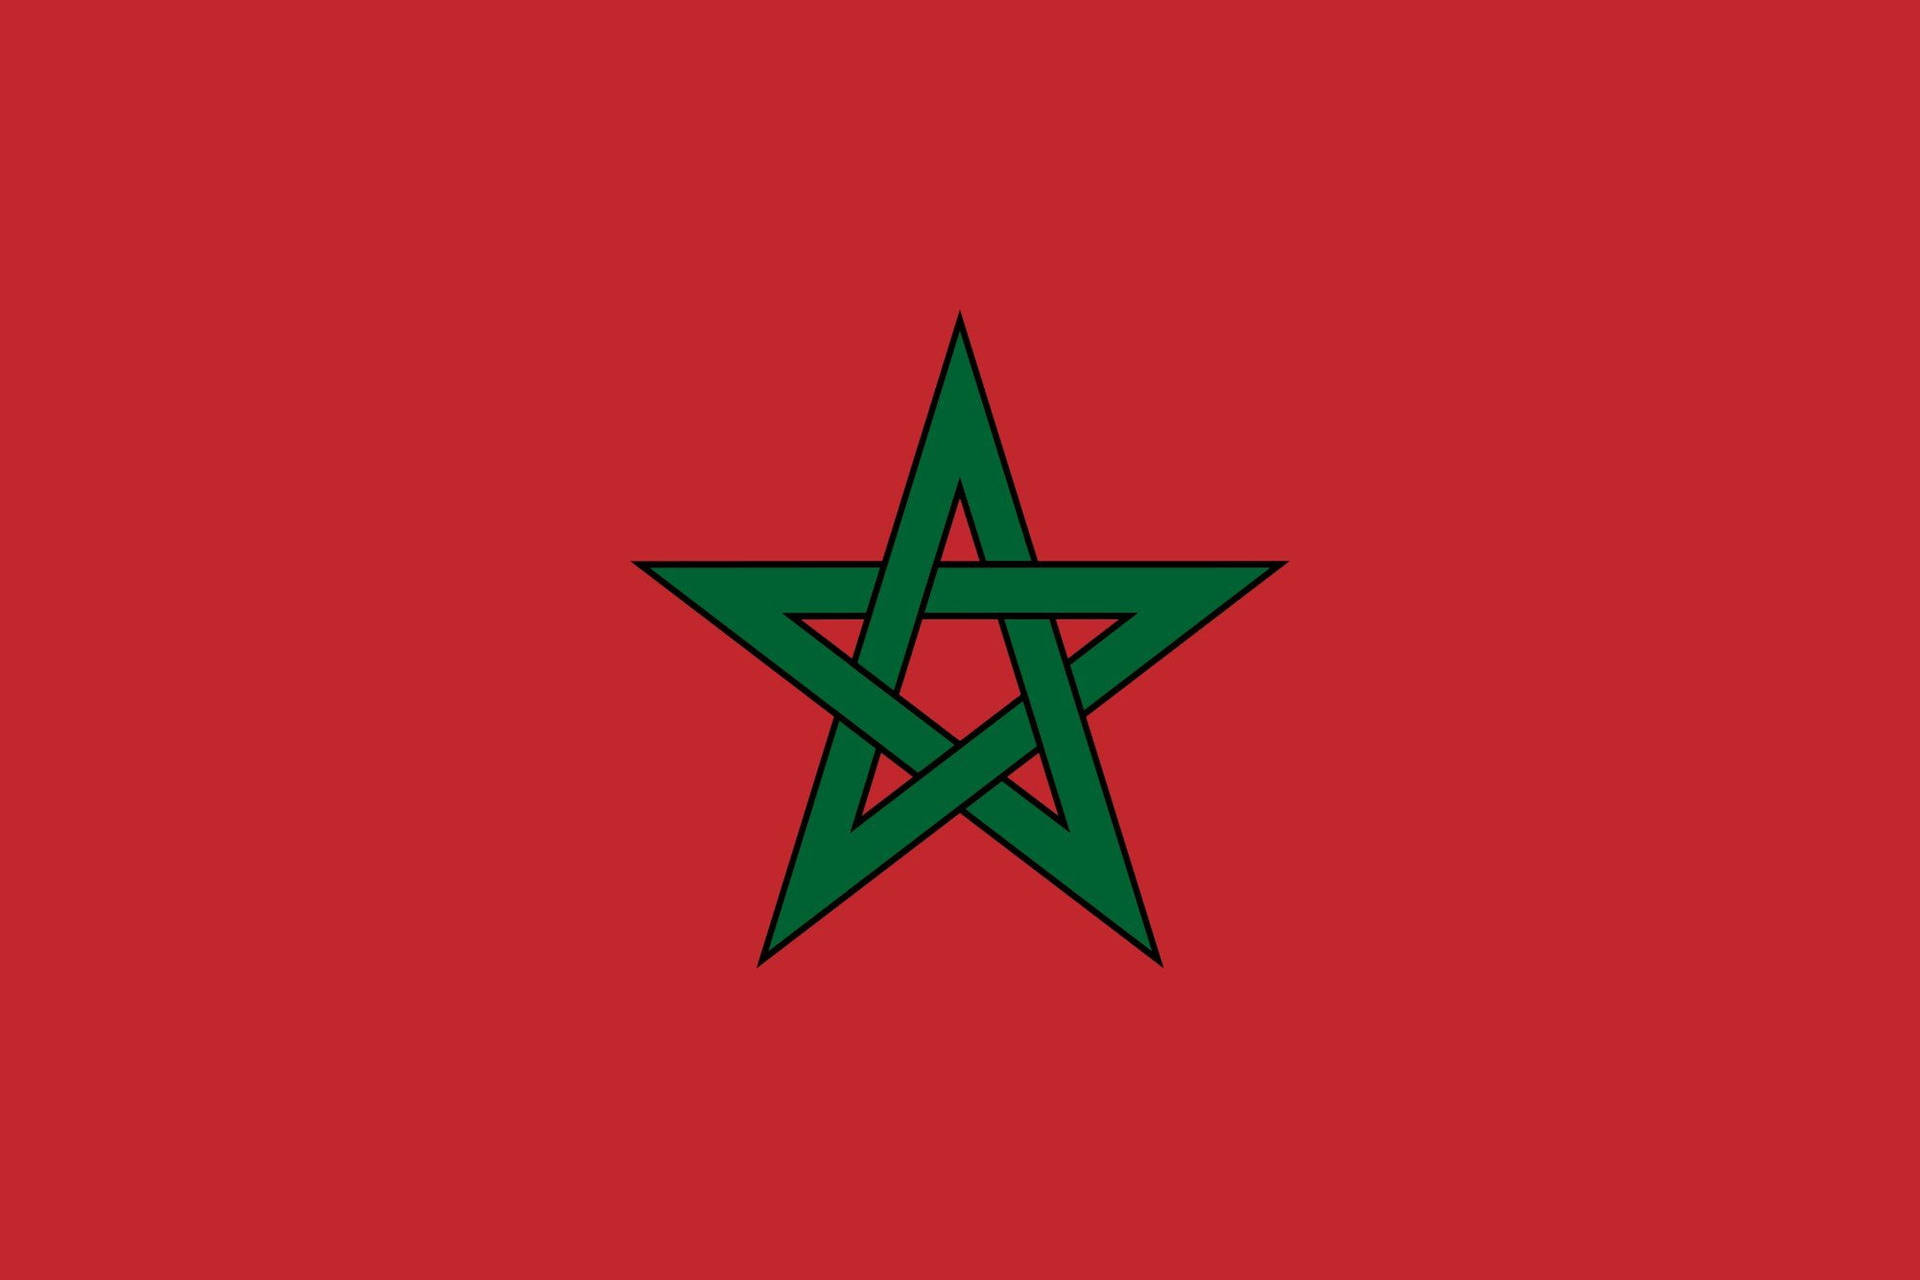 Vibrant Display of the Moroccan Flag Wallpaper